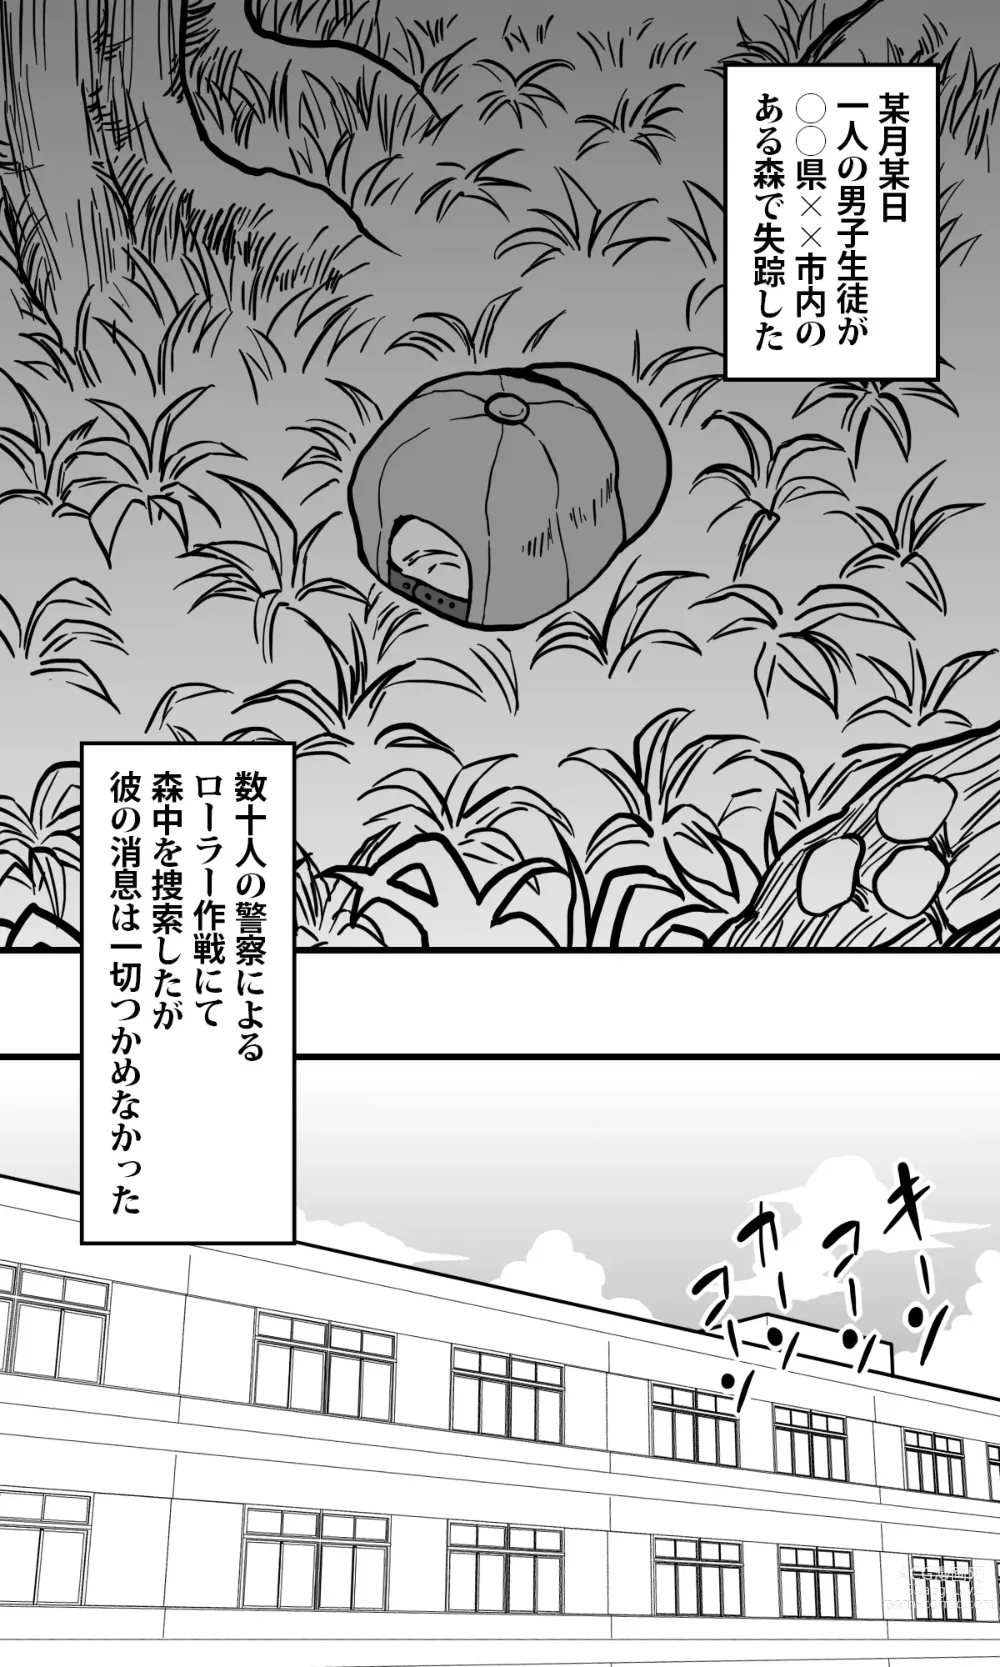 Page 1 of doujinshi POLMANGA_09